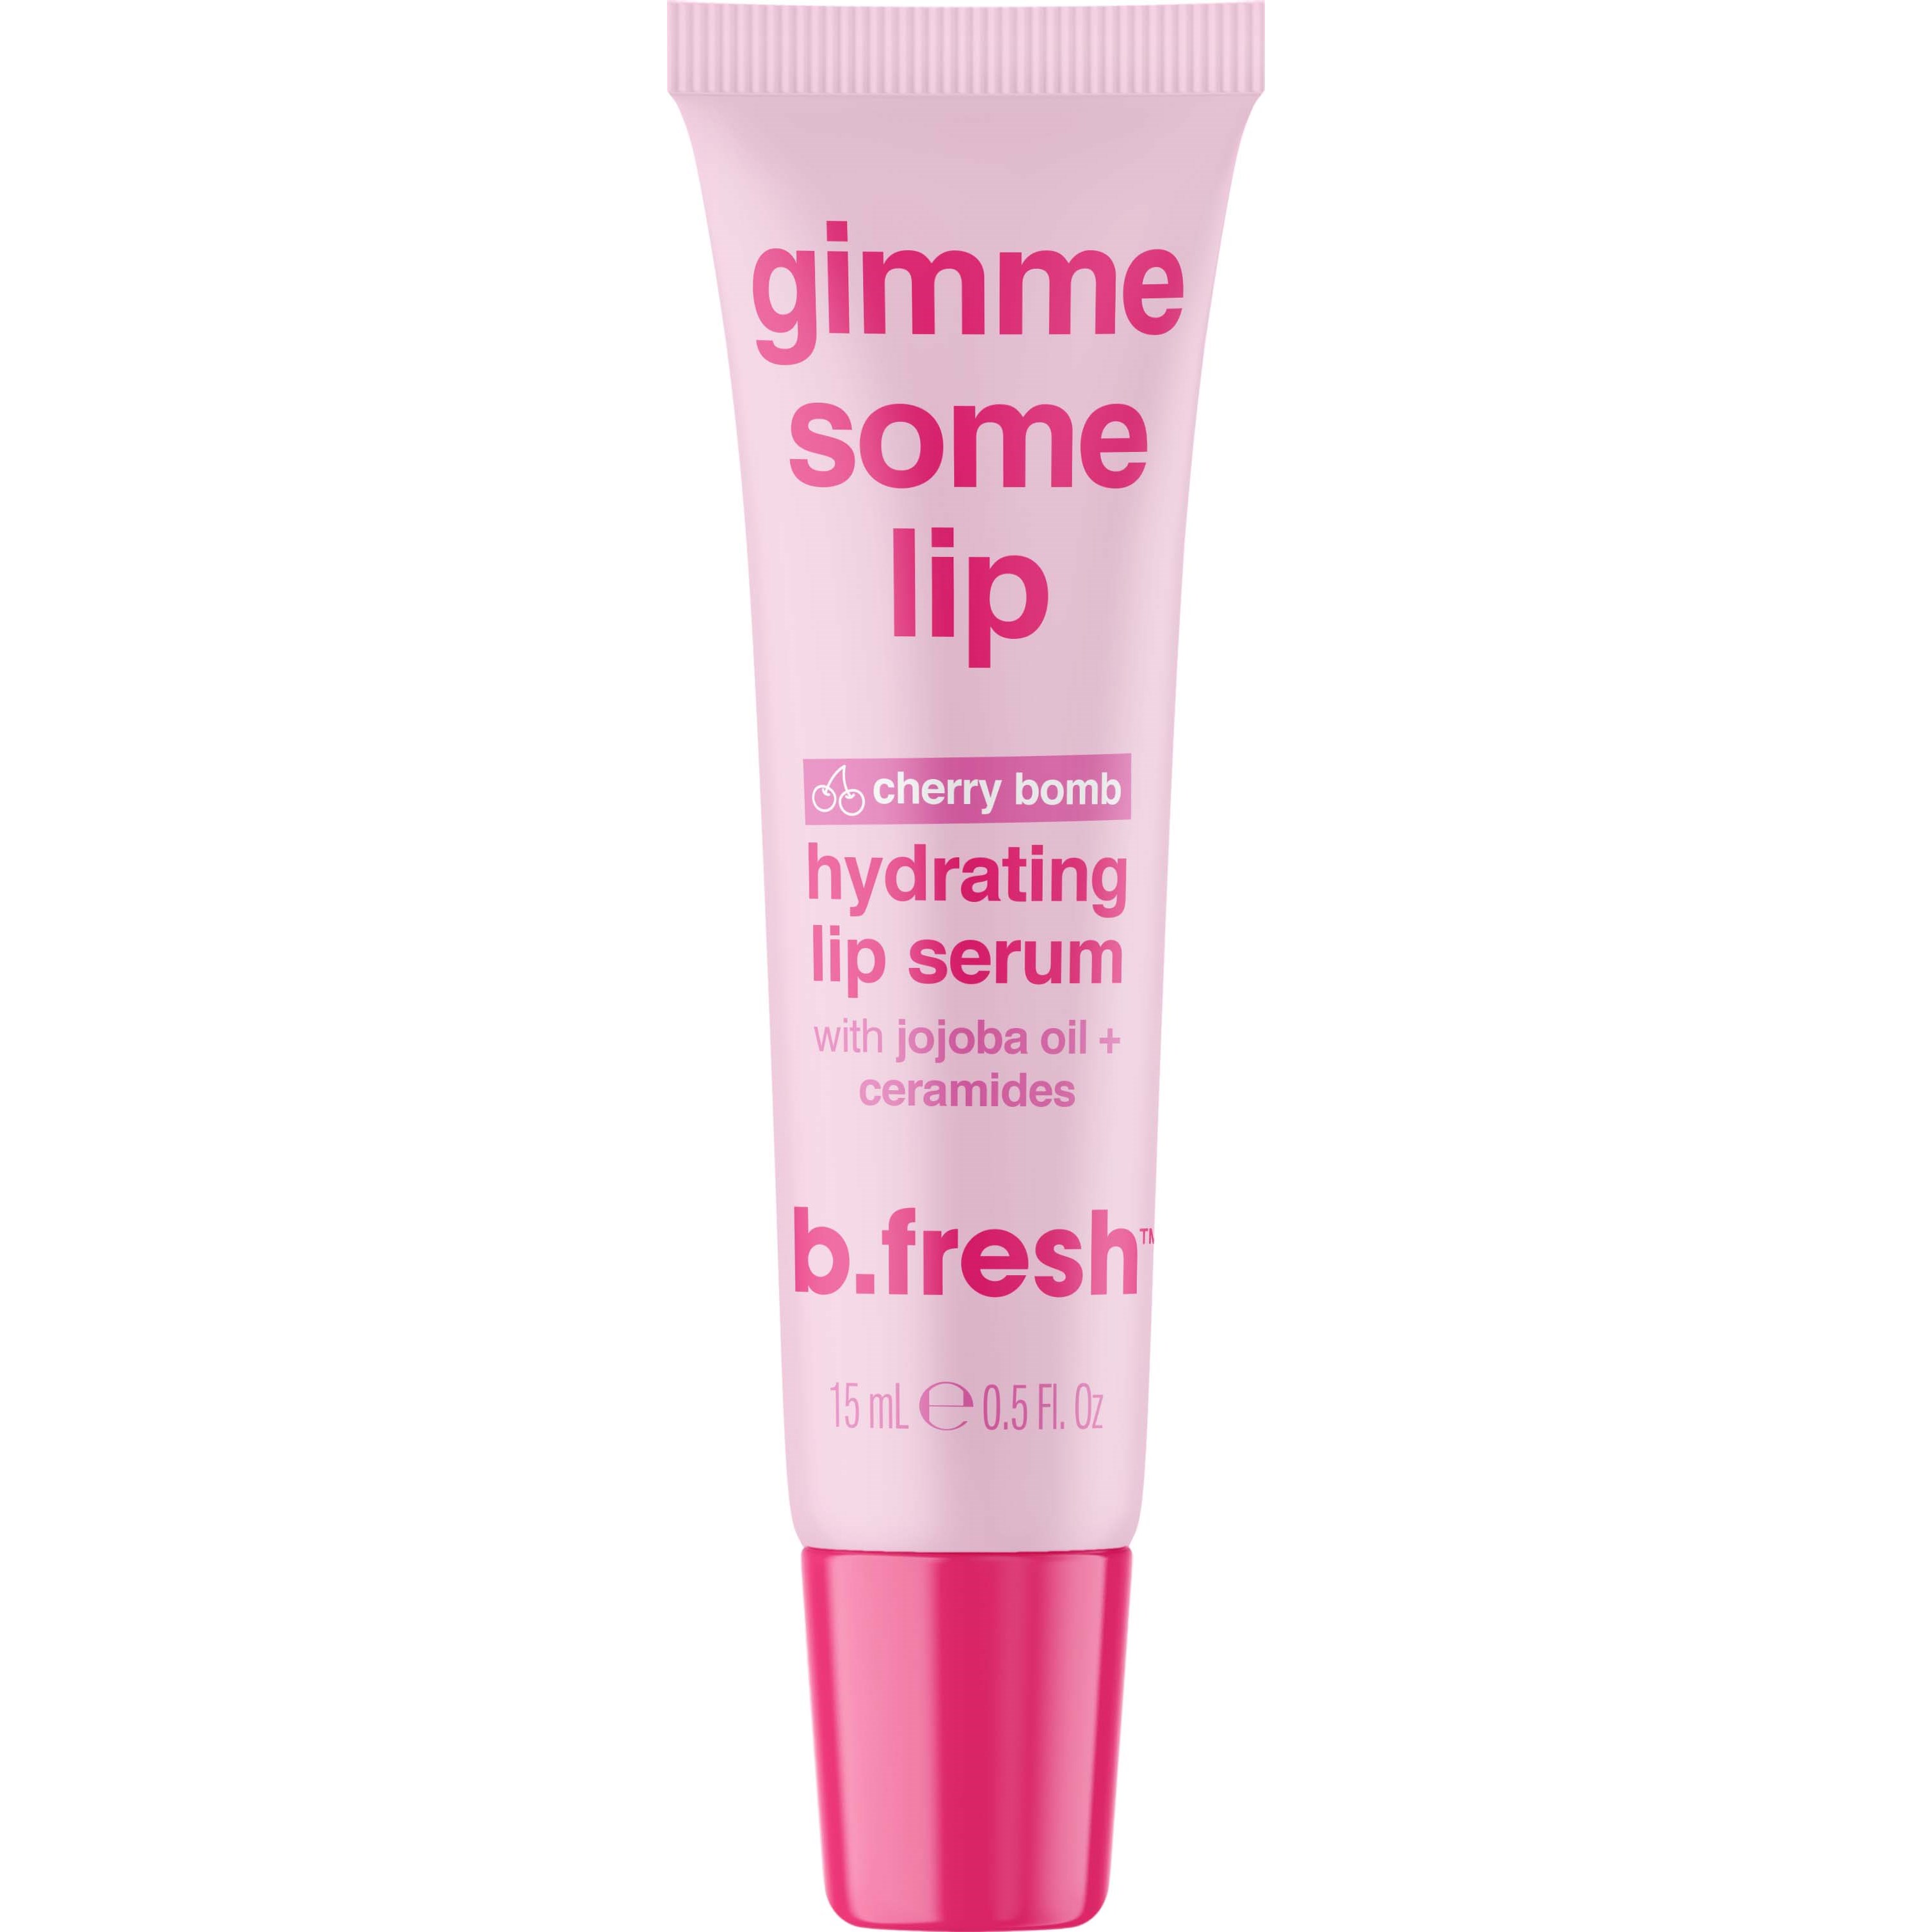 b.fresh Gimme some lip lip serum 15 ml